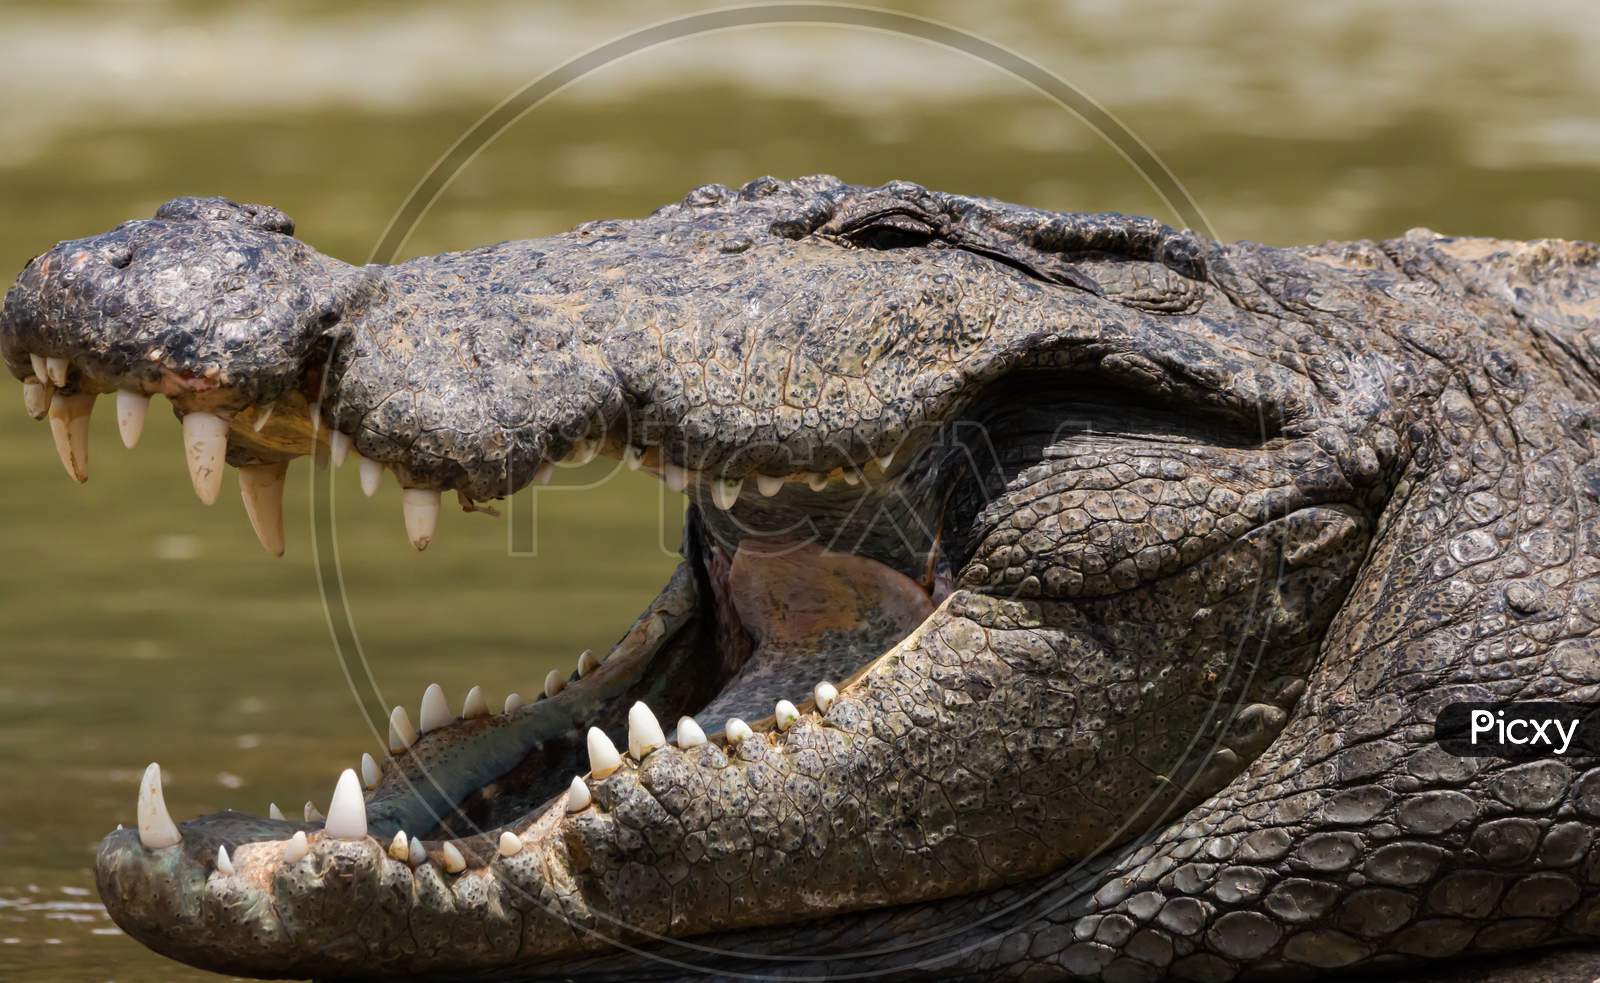 A Big Crocodile Close Up